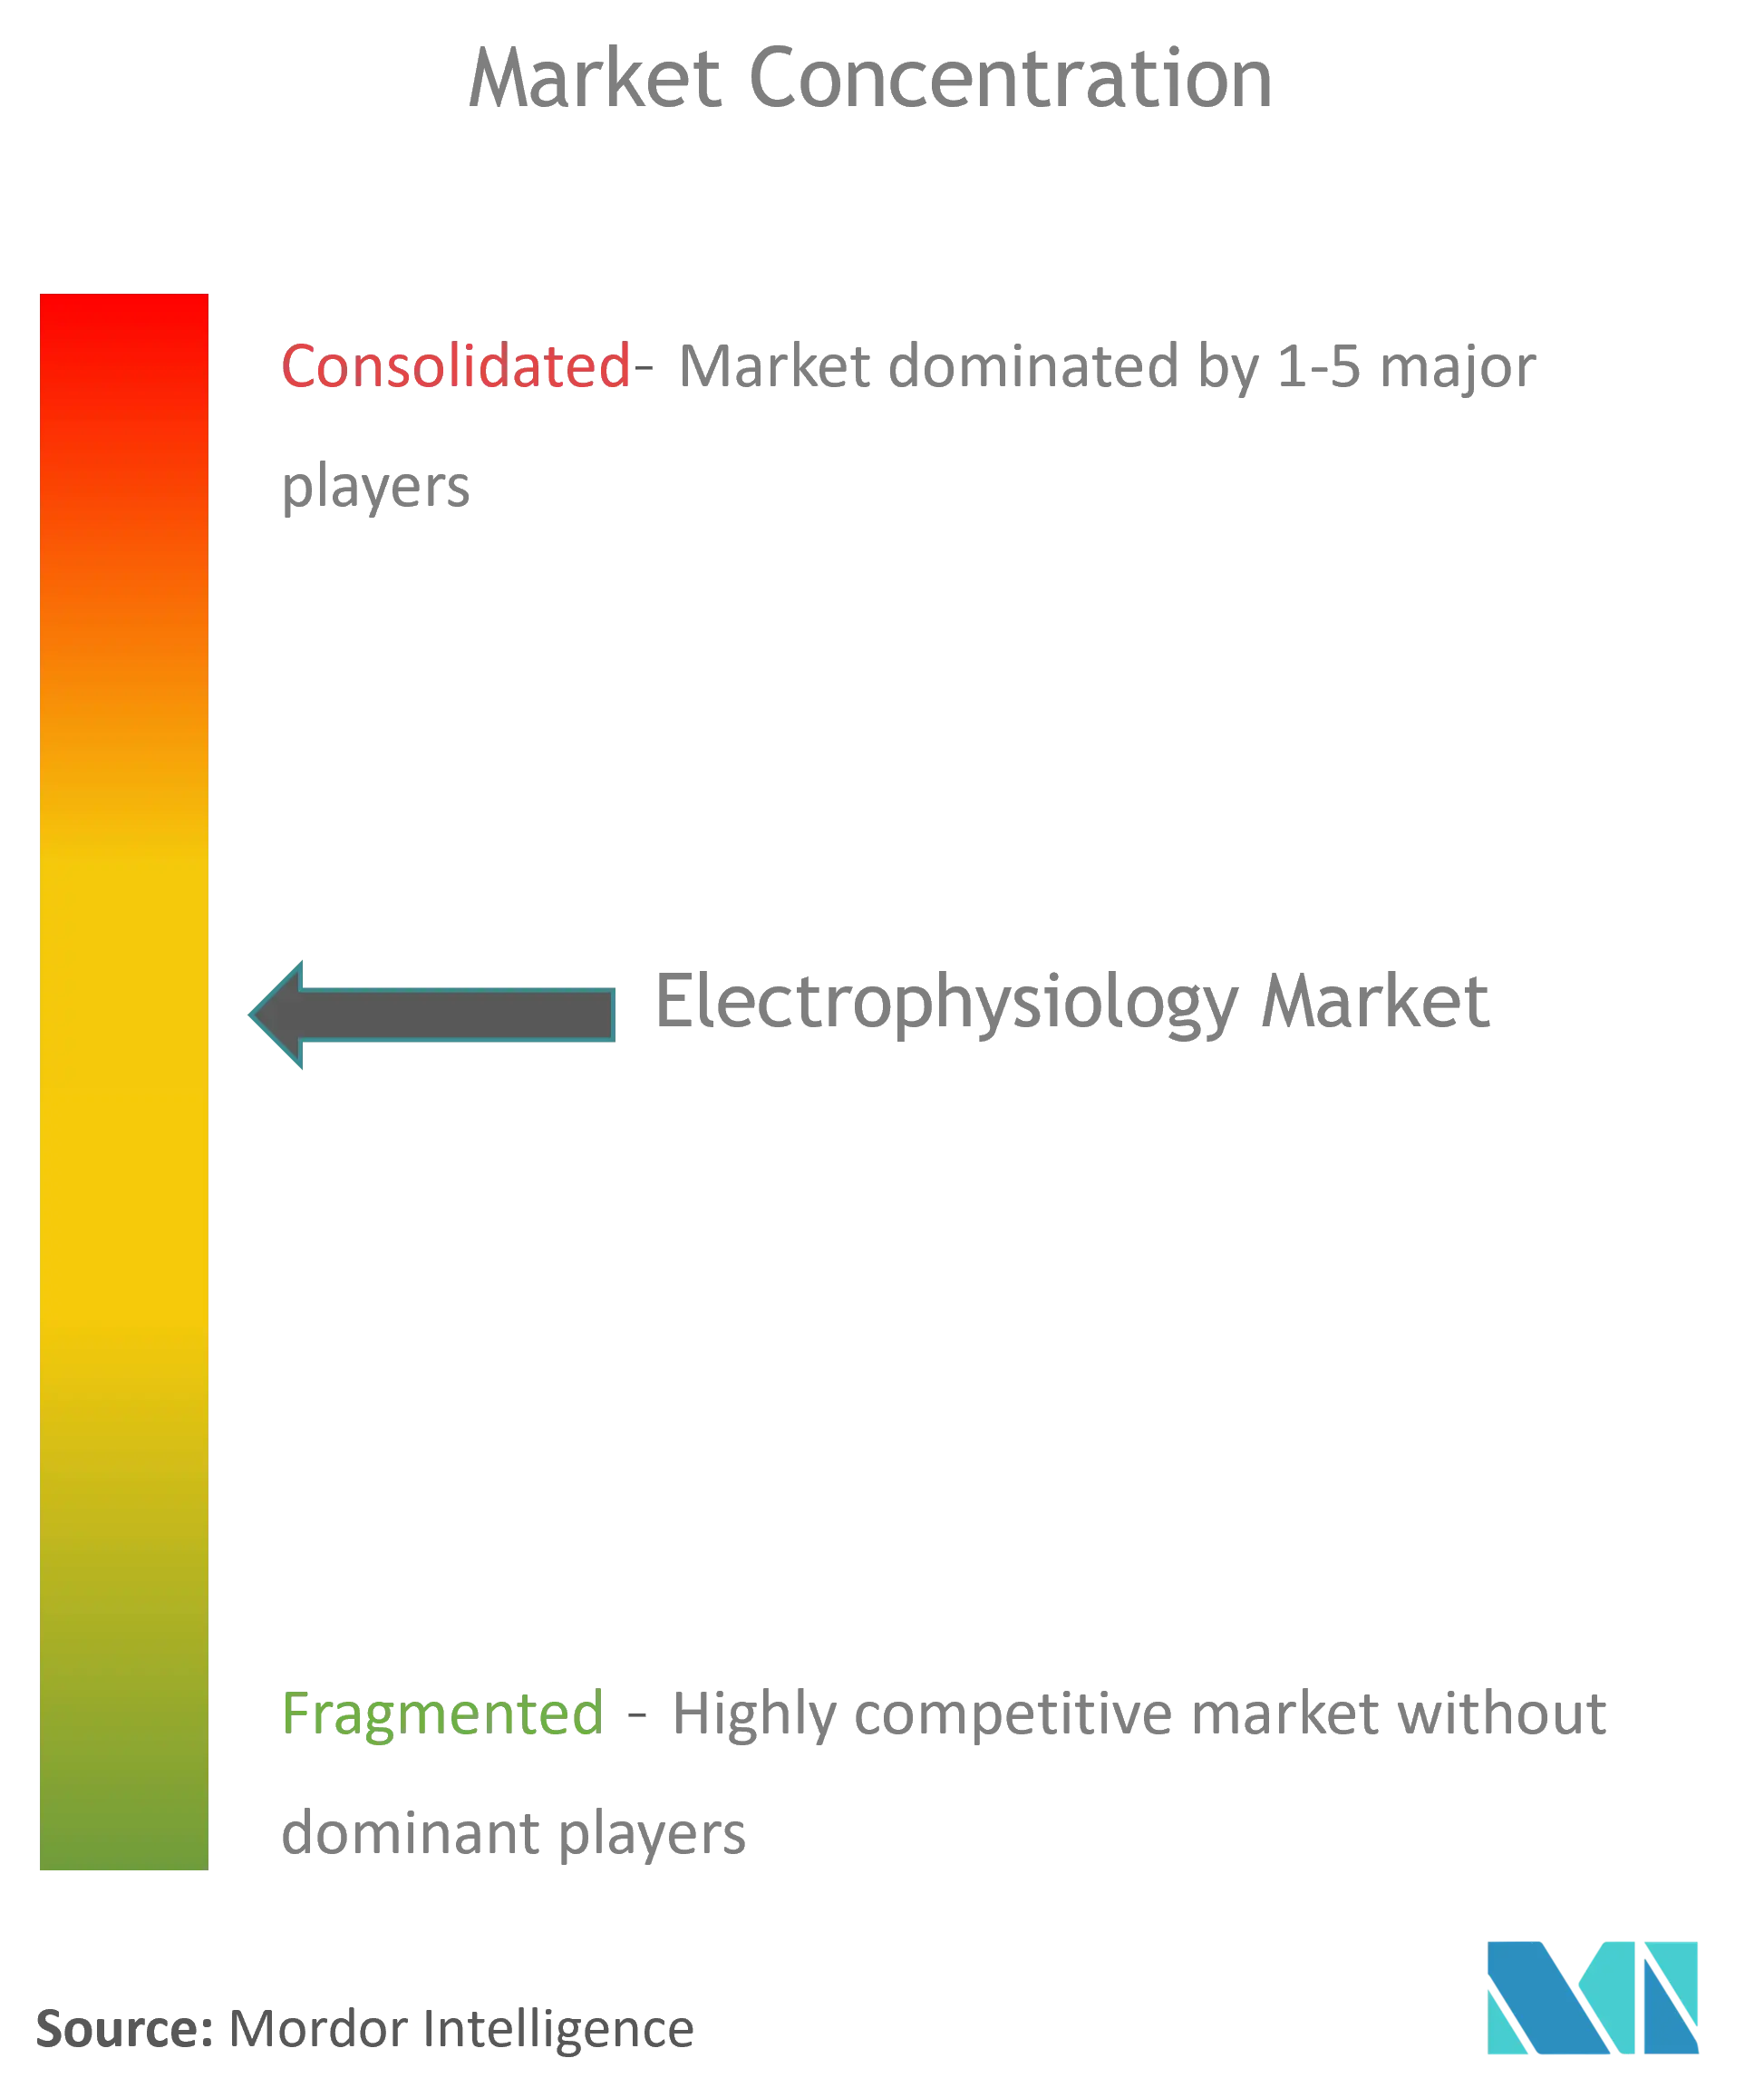 Electrophysiology Market Concentration